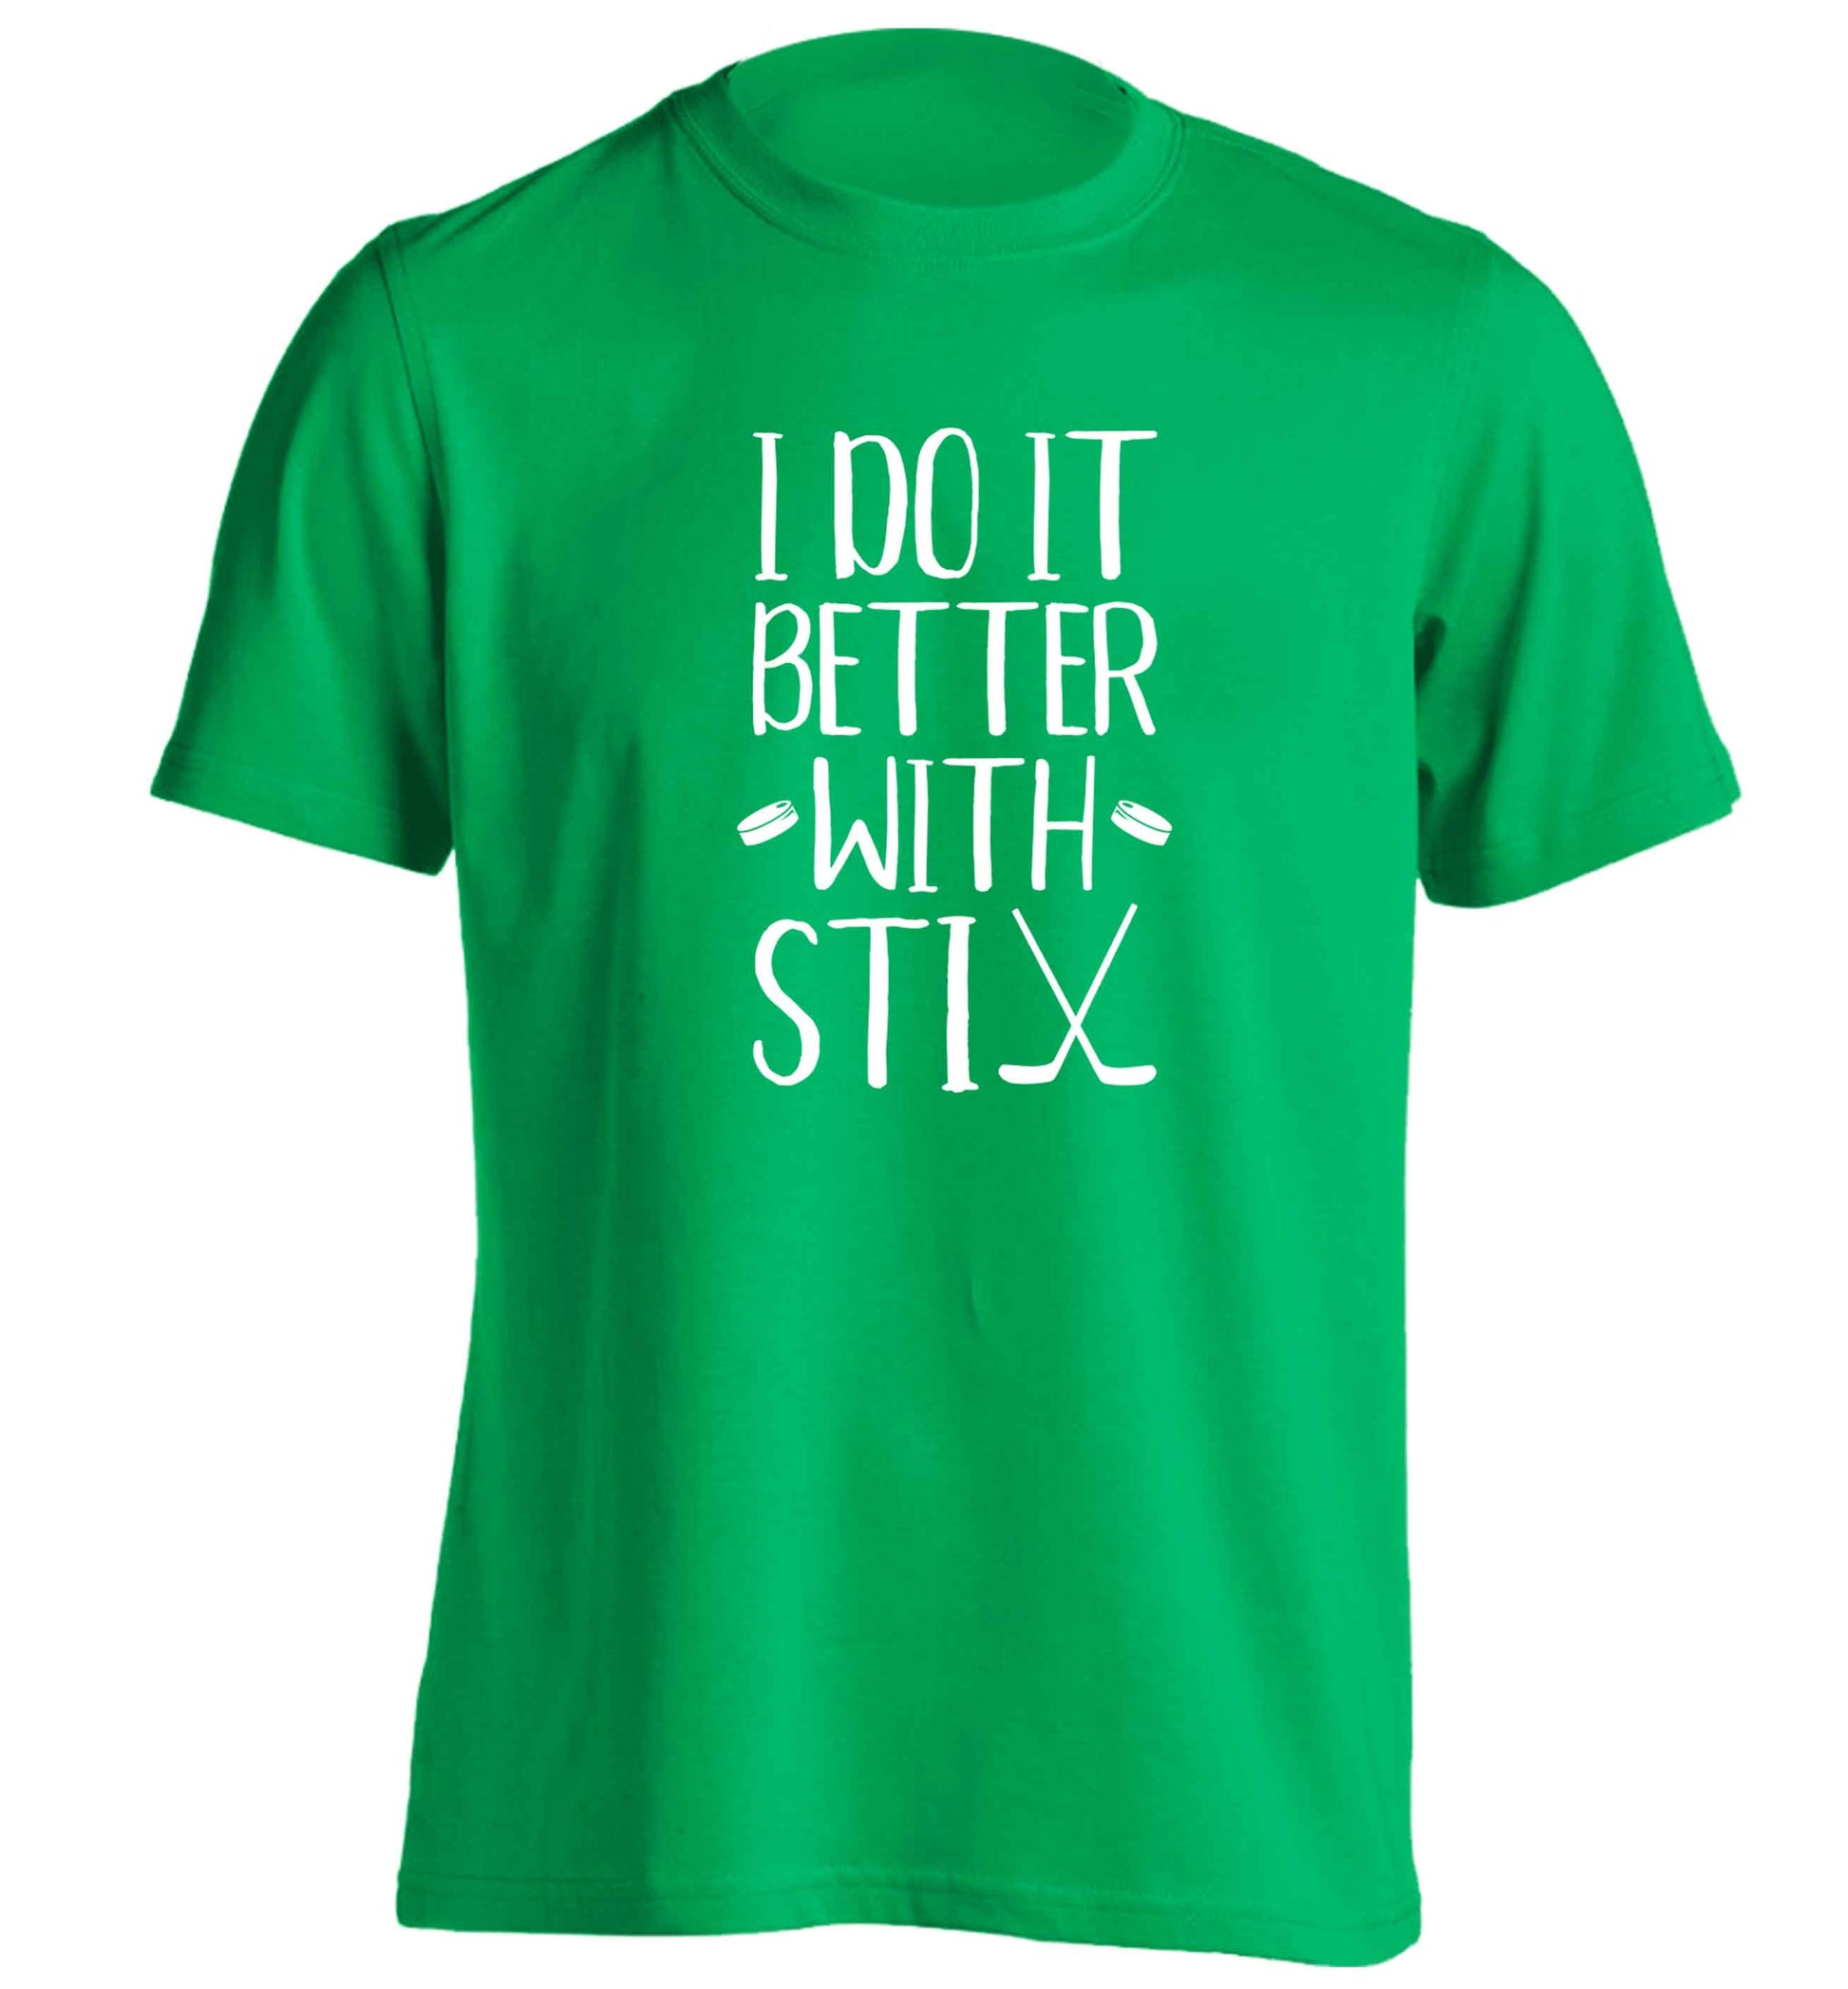 I do it better with stix (hockey) adults unisex green Tshirt 2XL